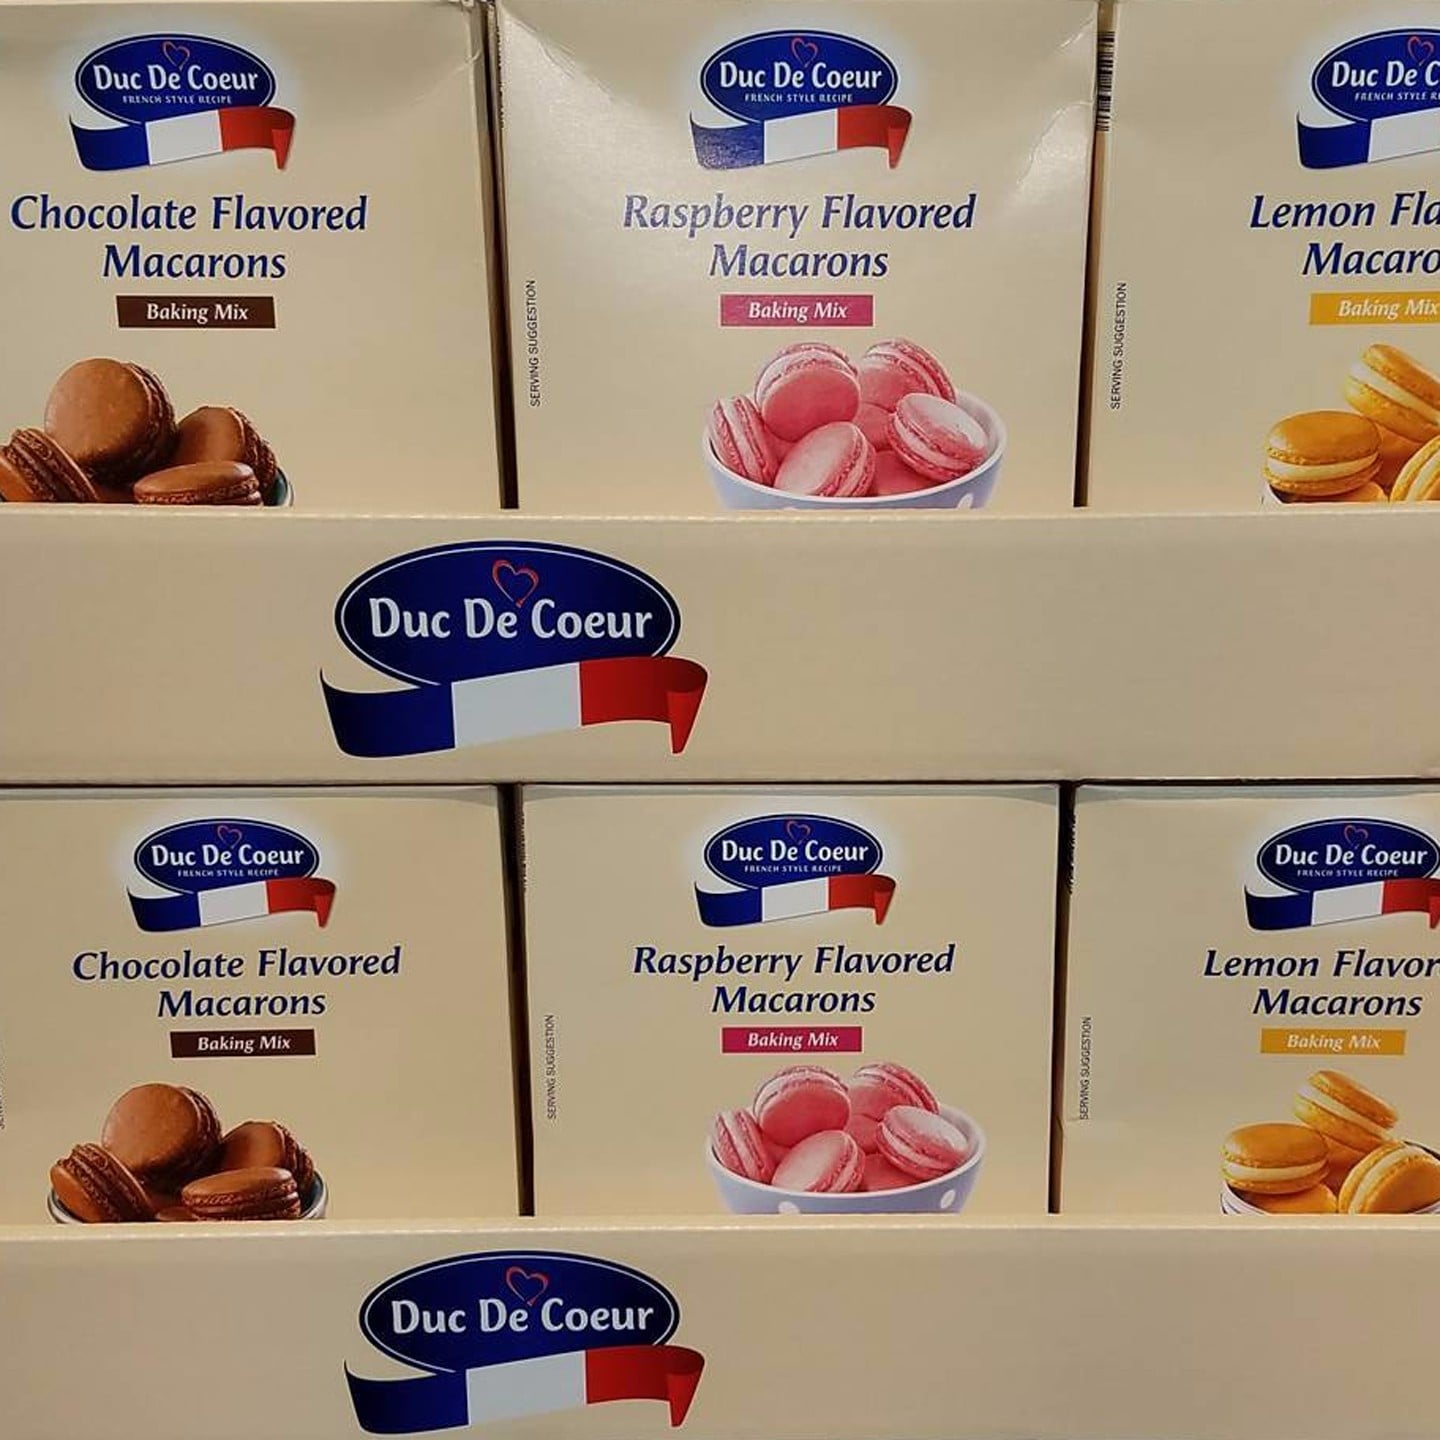 Desillusie Vlot haar Best Foods to Buy at Lidl | POPSUGAR Food